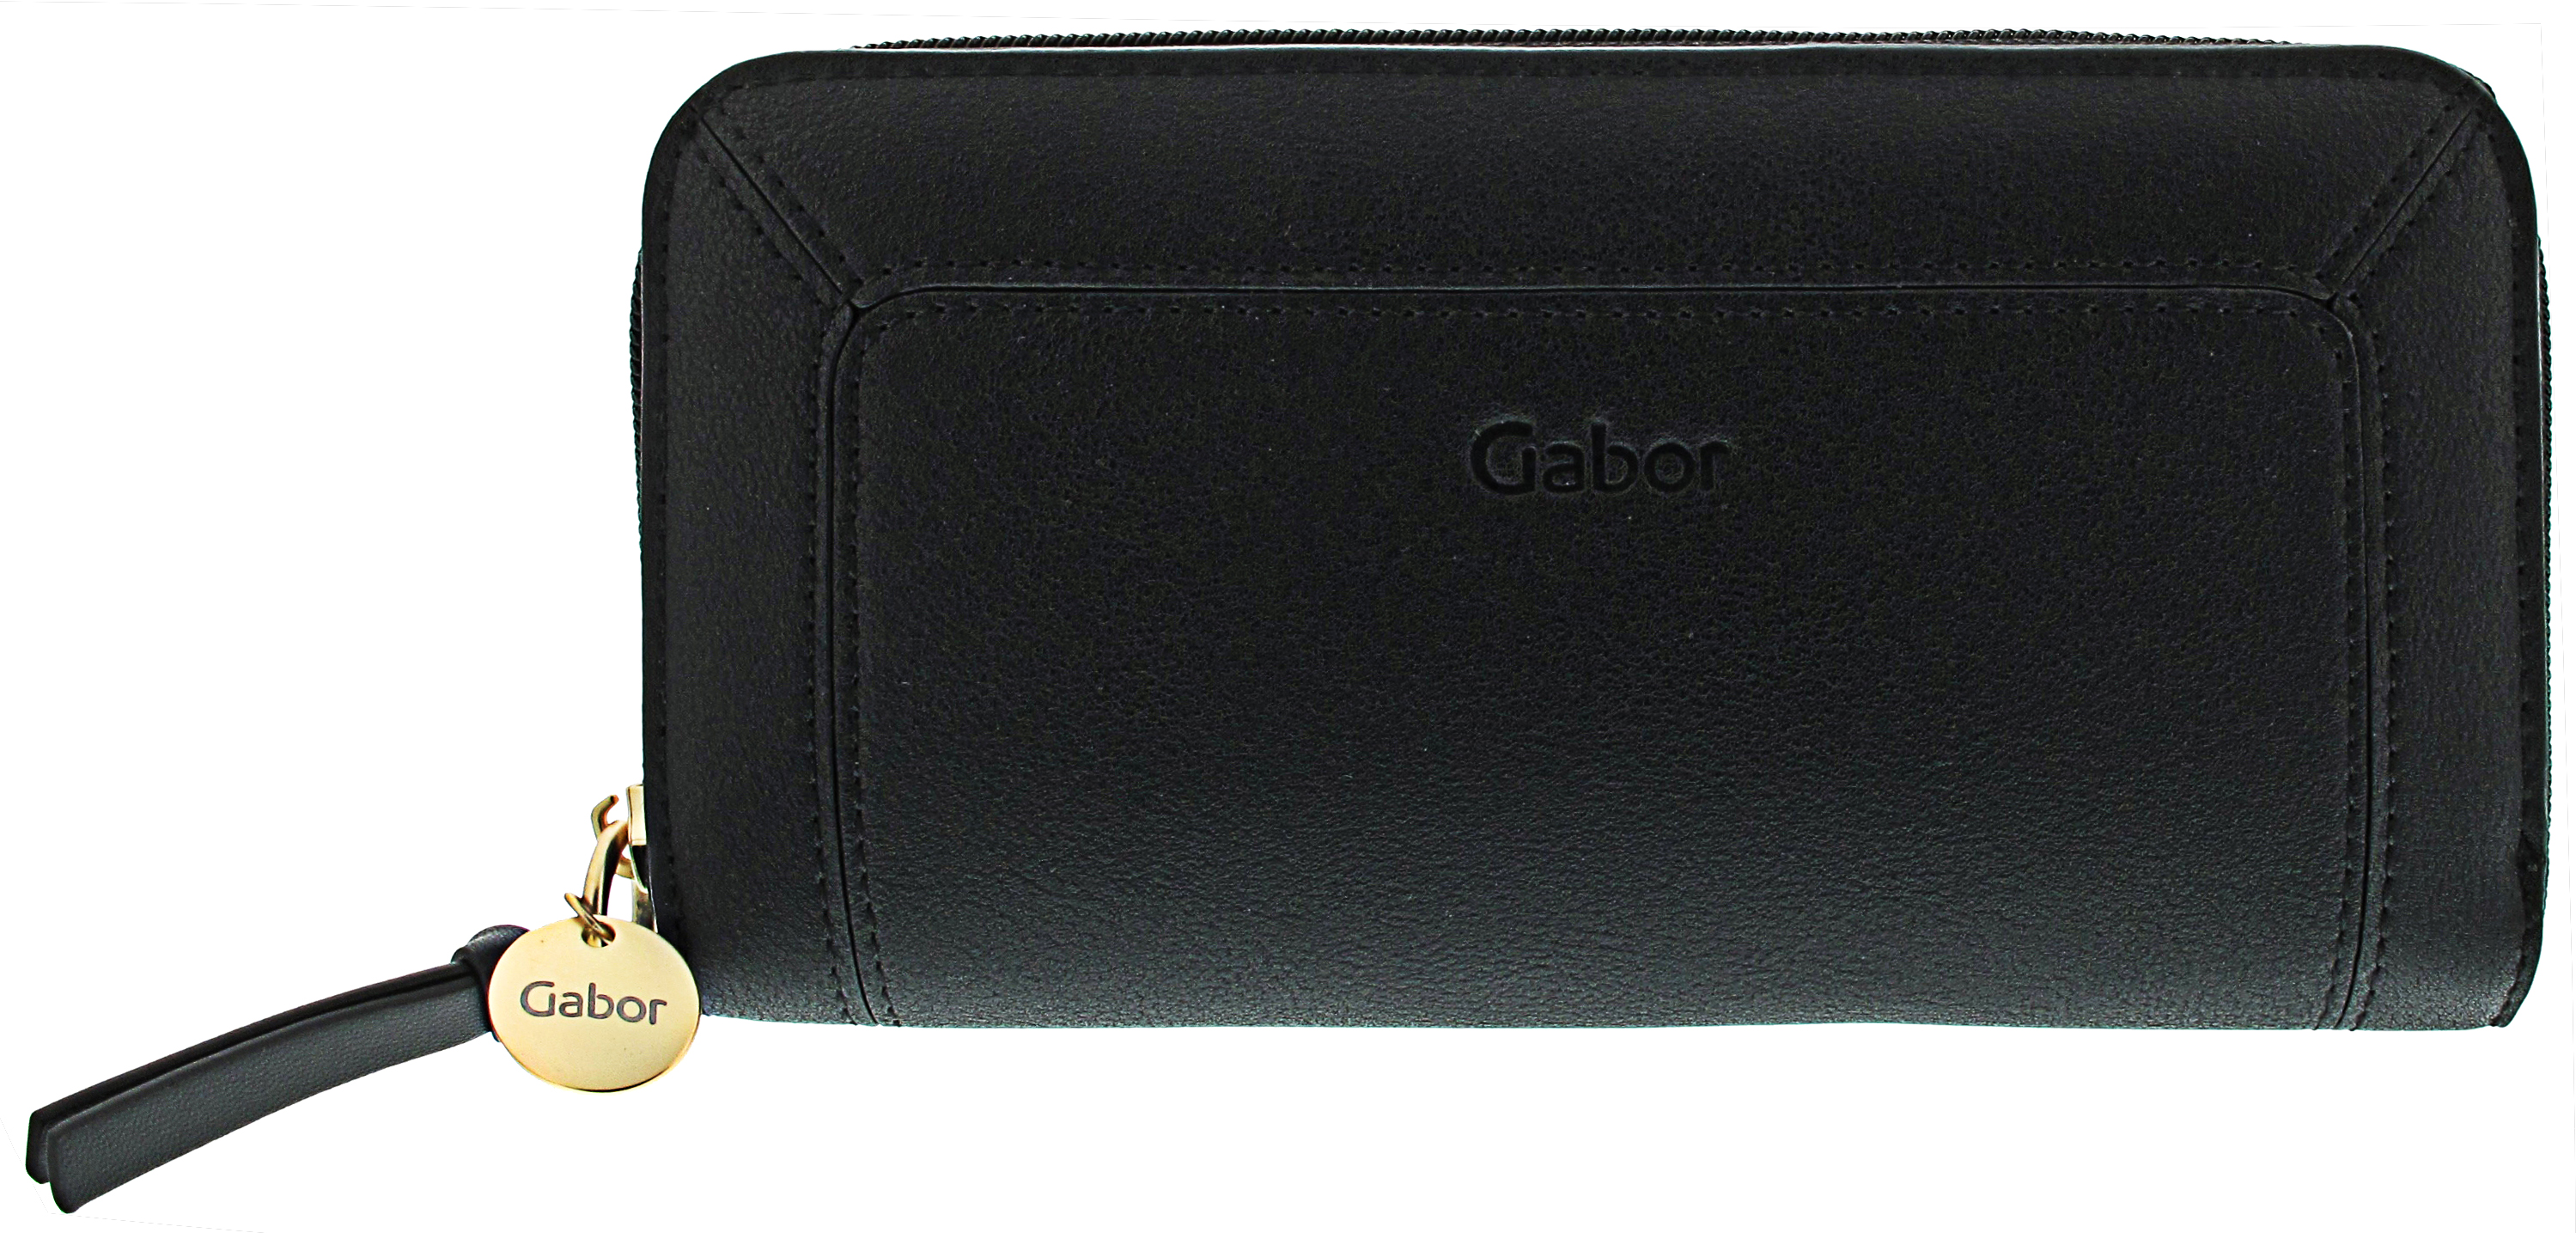 Gabor Francis Long Zip Wallet